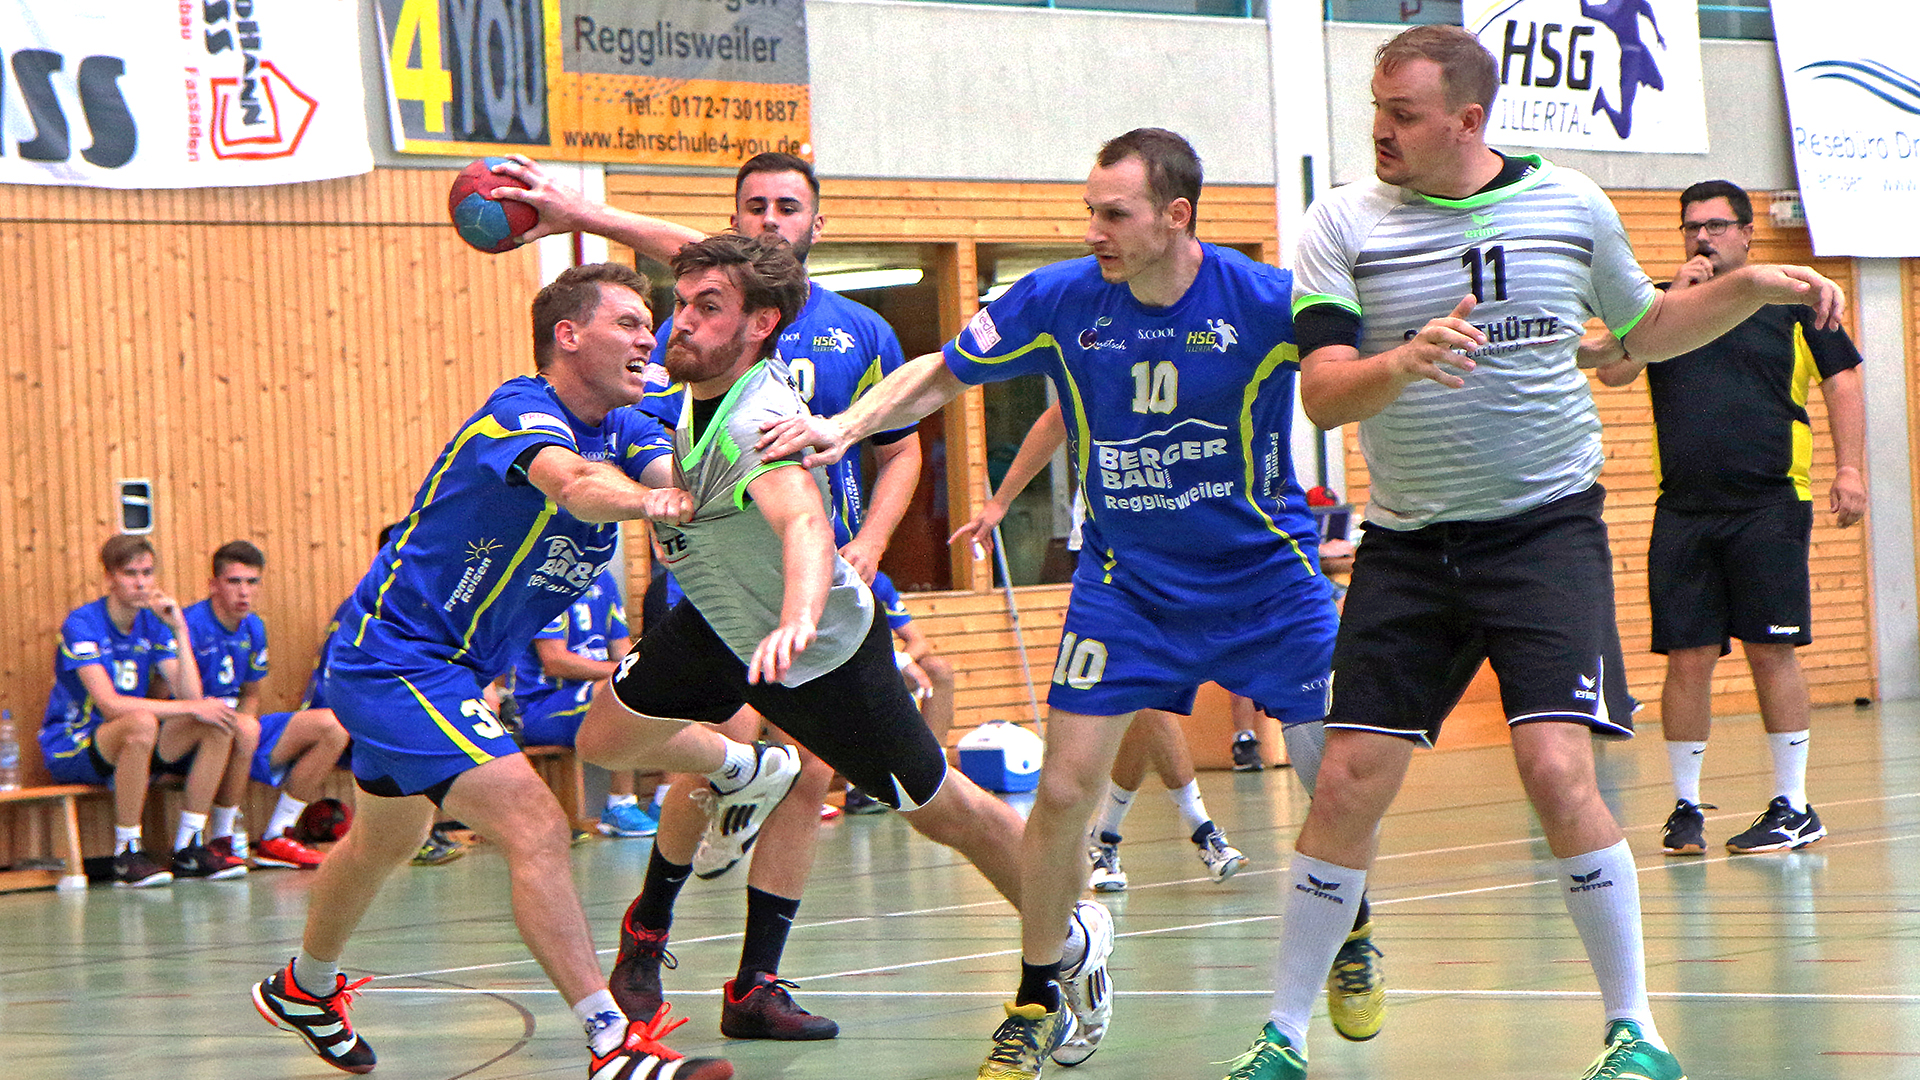 054Slider_Herren1_tsg_leutkirch_handball